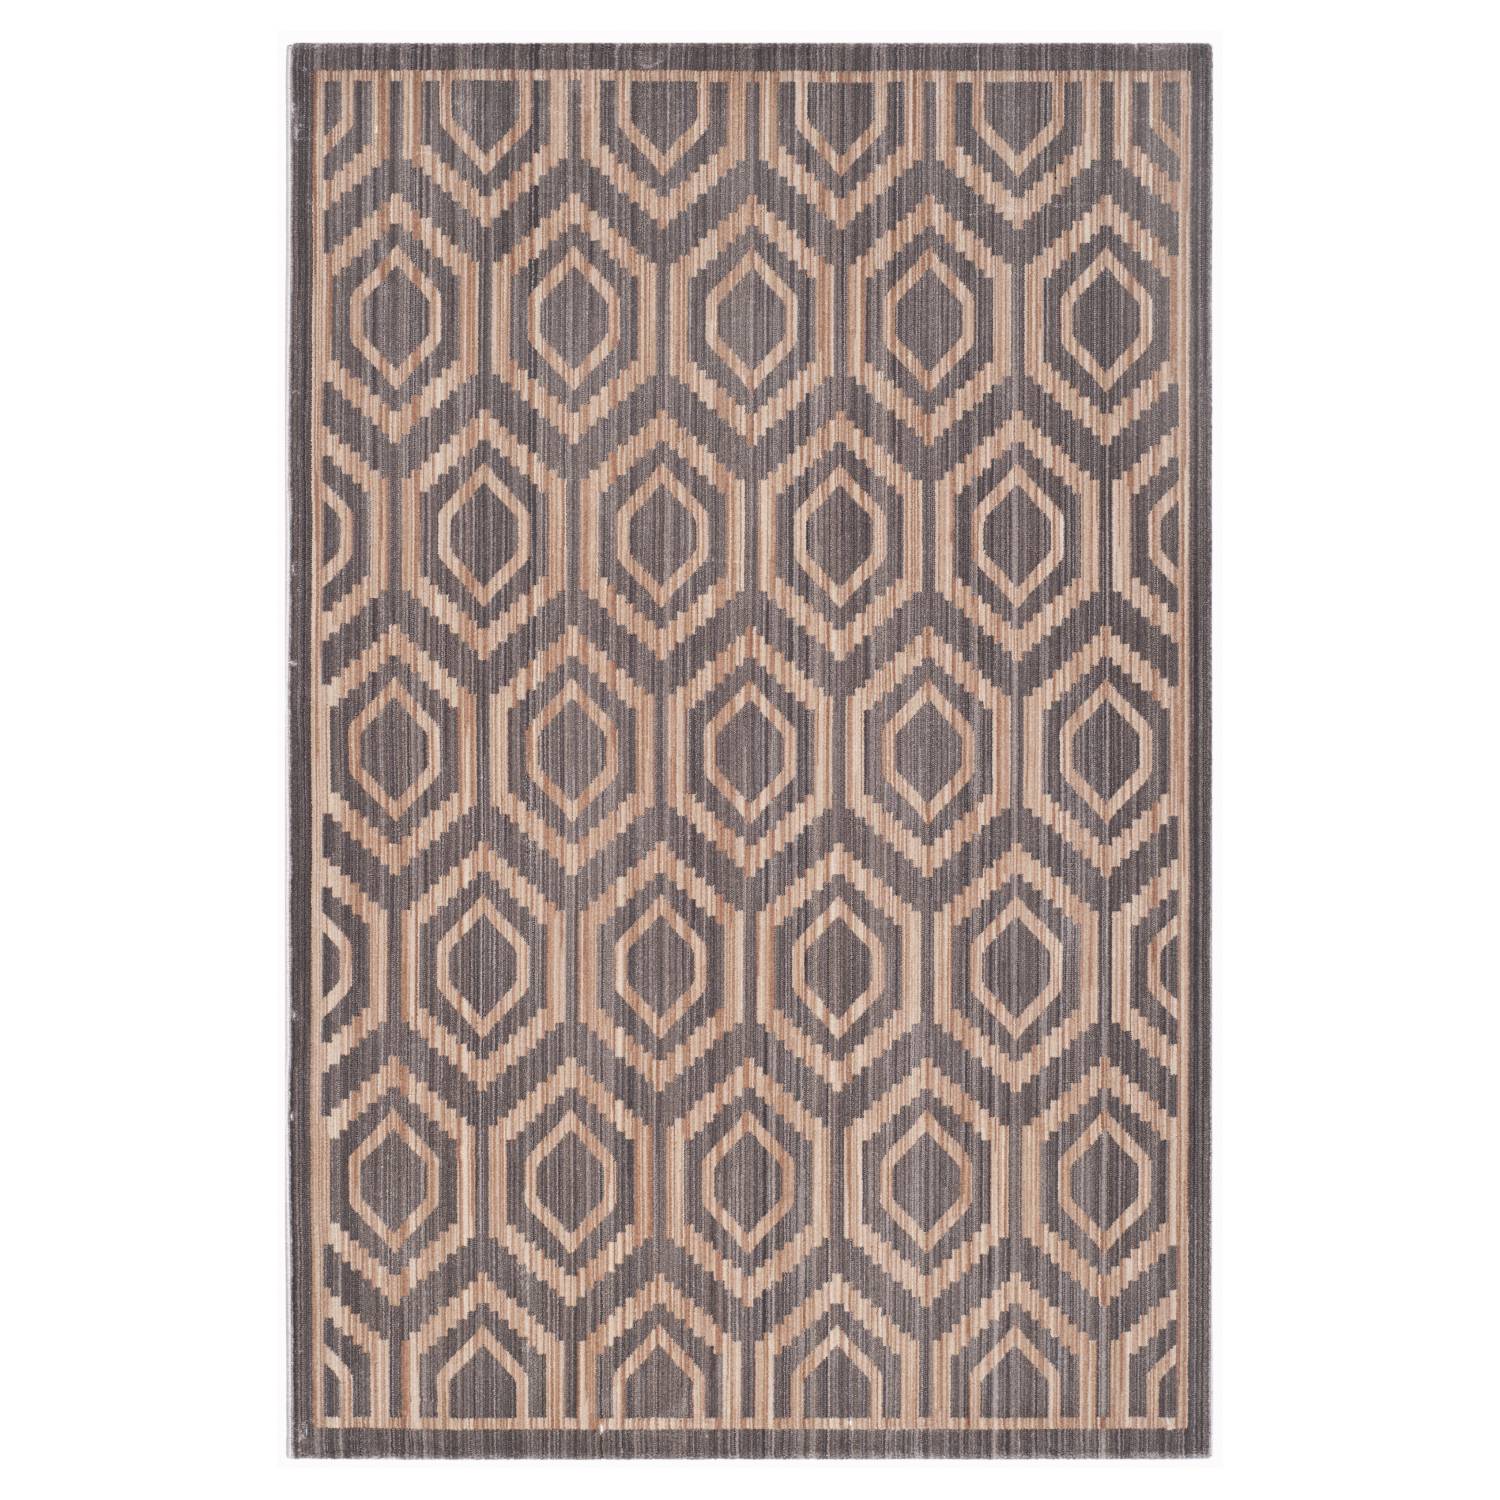 Teppich Bellagio - Grau/Beige - MaÃŸe: 121 x 182 cm, Safavieh